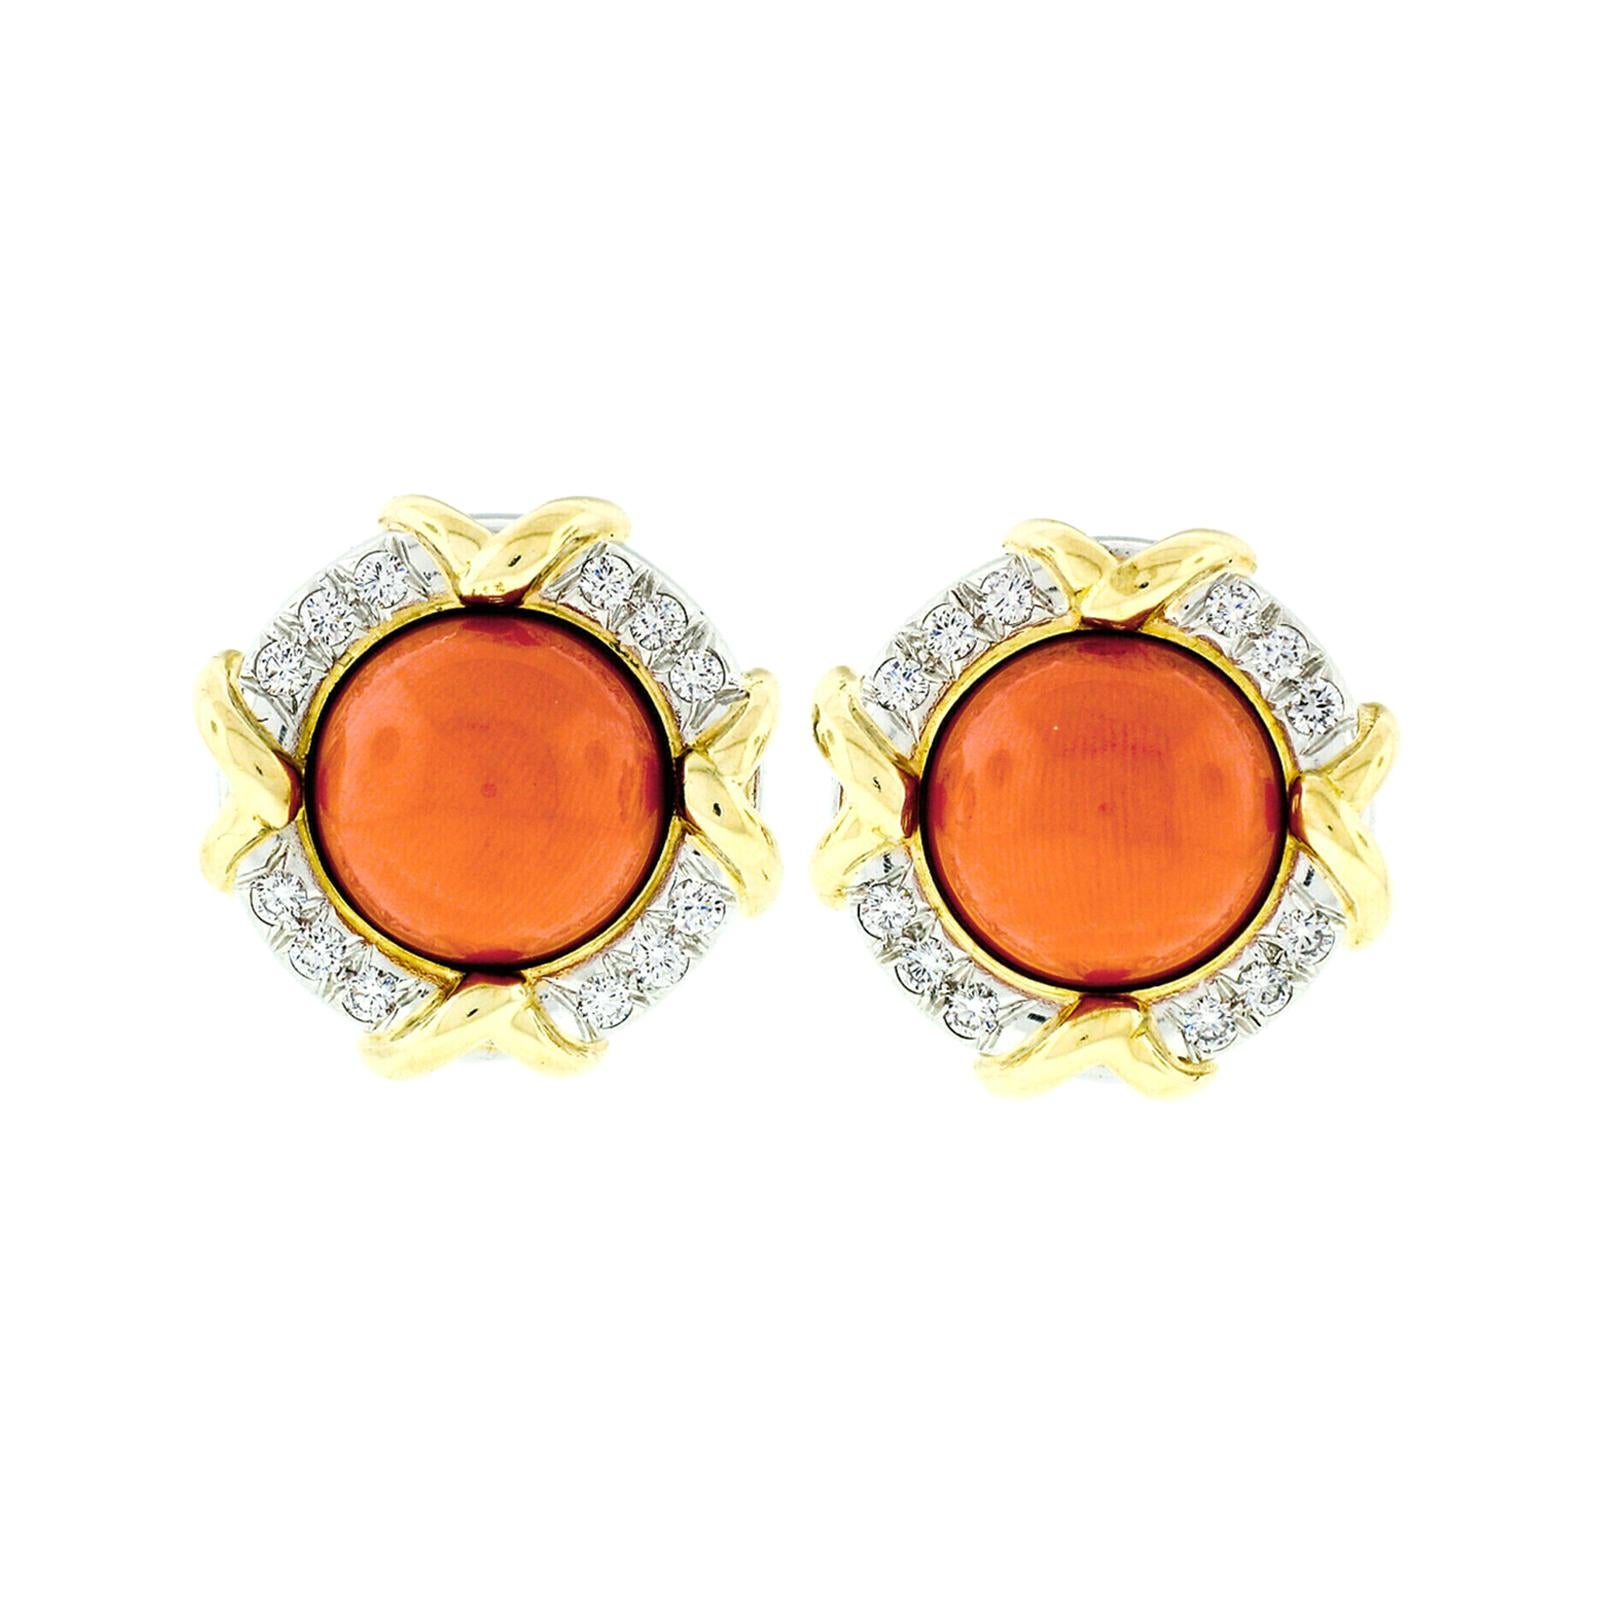 Tiffany & Co. 1985 18k Gold & Platinum GIA Round Coral & Diamond Button Earrings